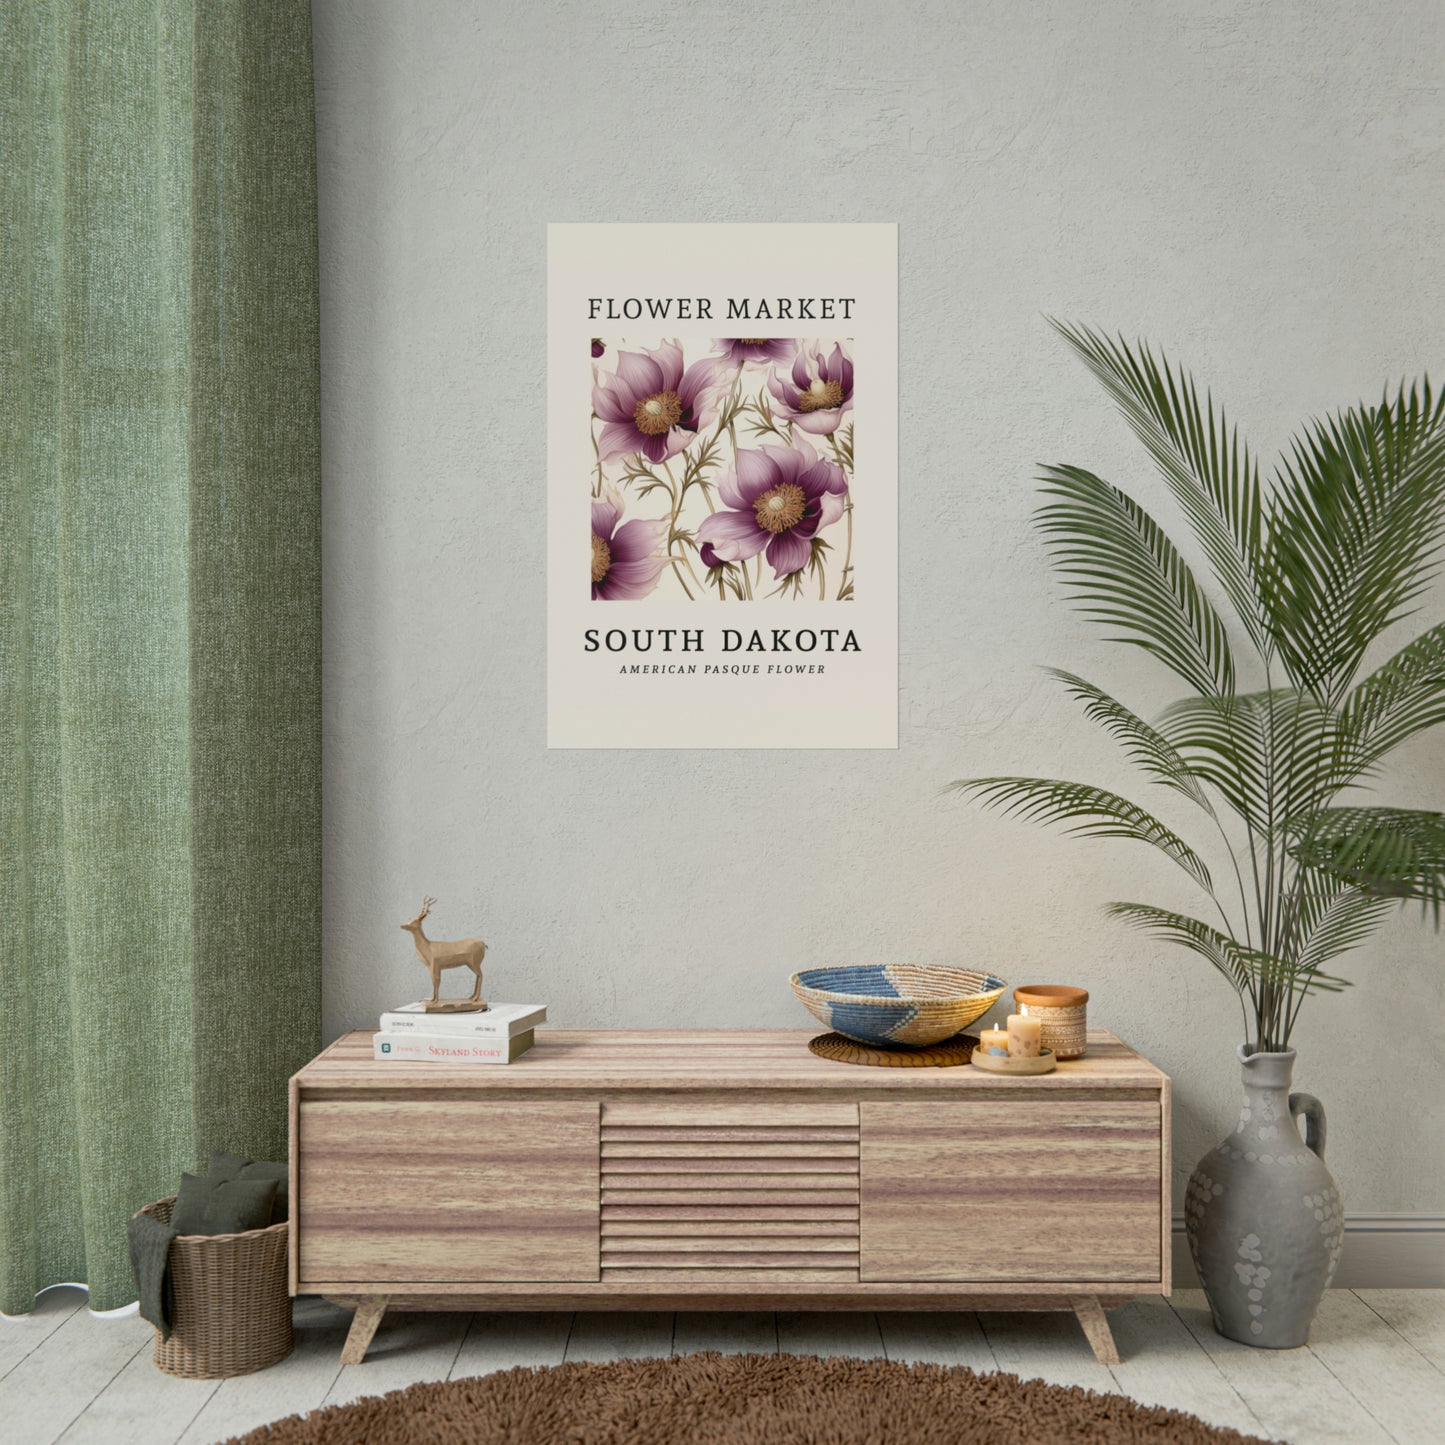 South Dakota FLOWER MARKET Poster American Pasque Flower Print